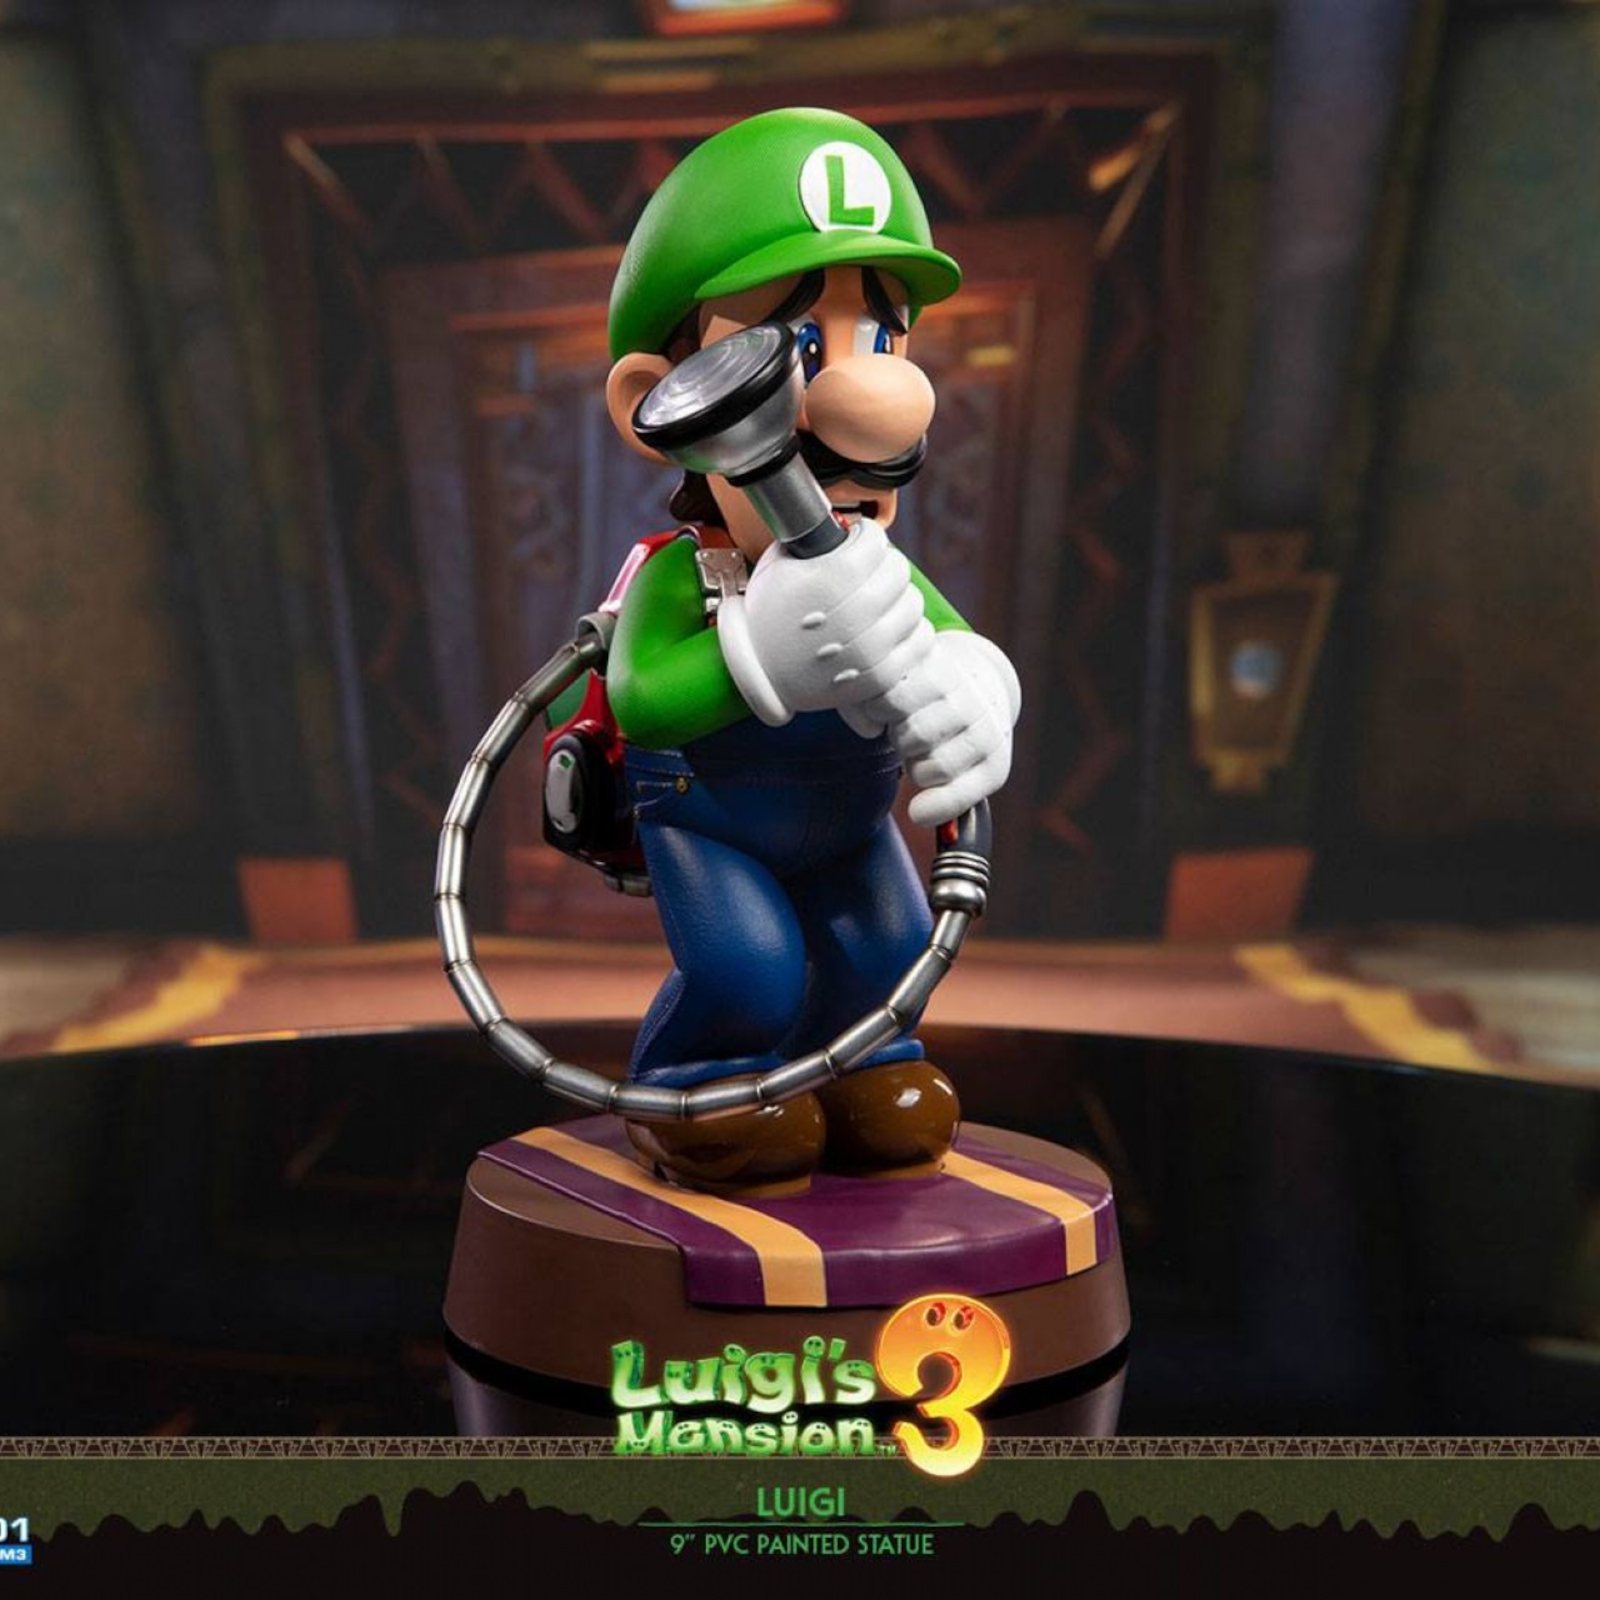 Image showing Luigi cowering, text on screen reads Luigi's Mansions 3. Luigi, 9 inch PVC painter statue